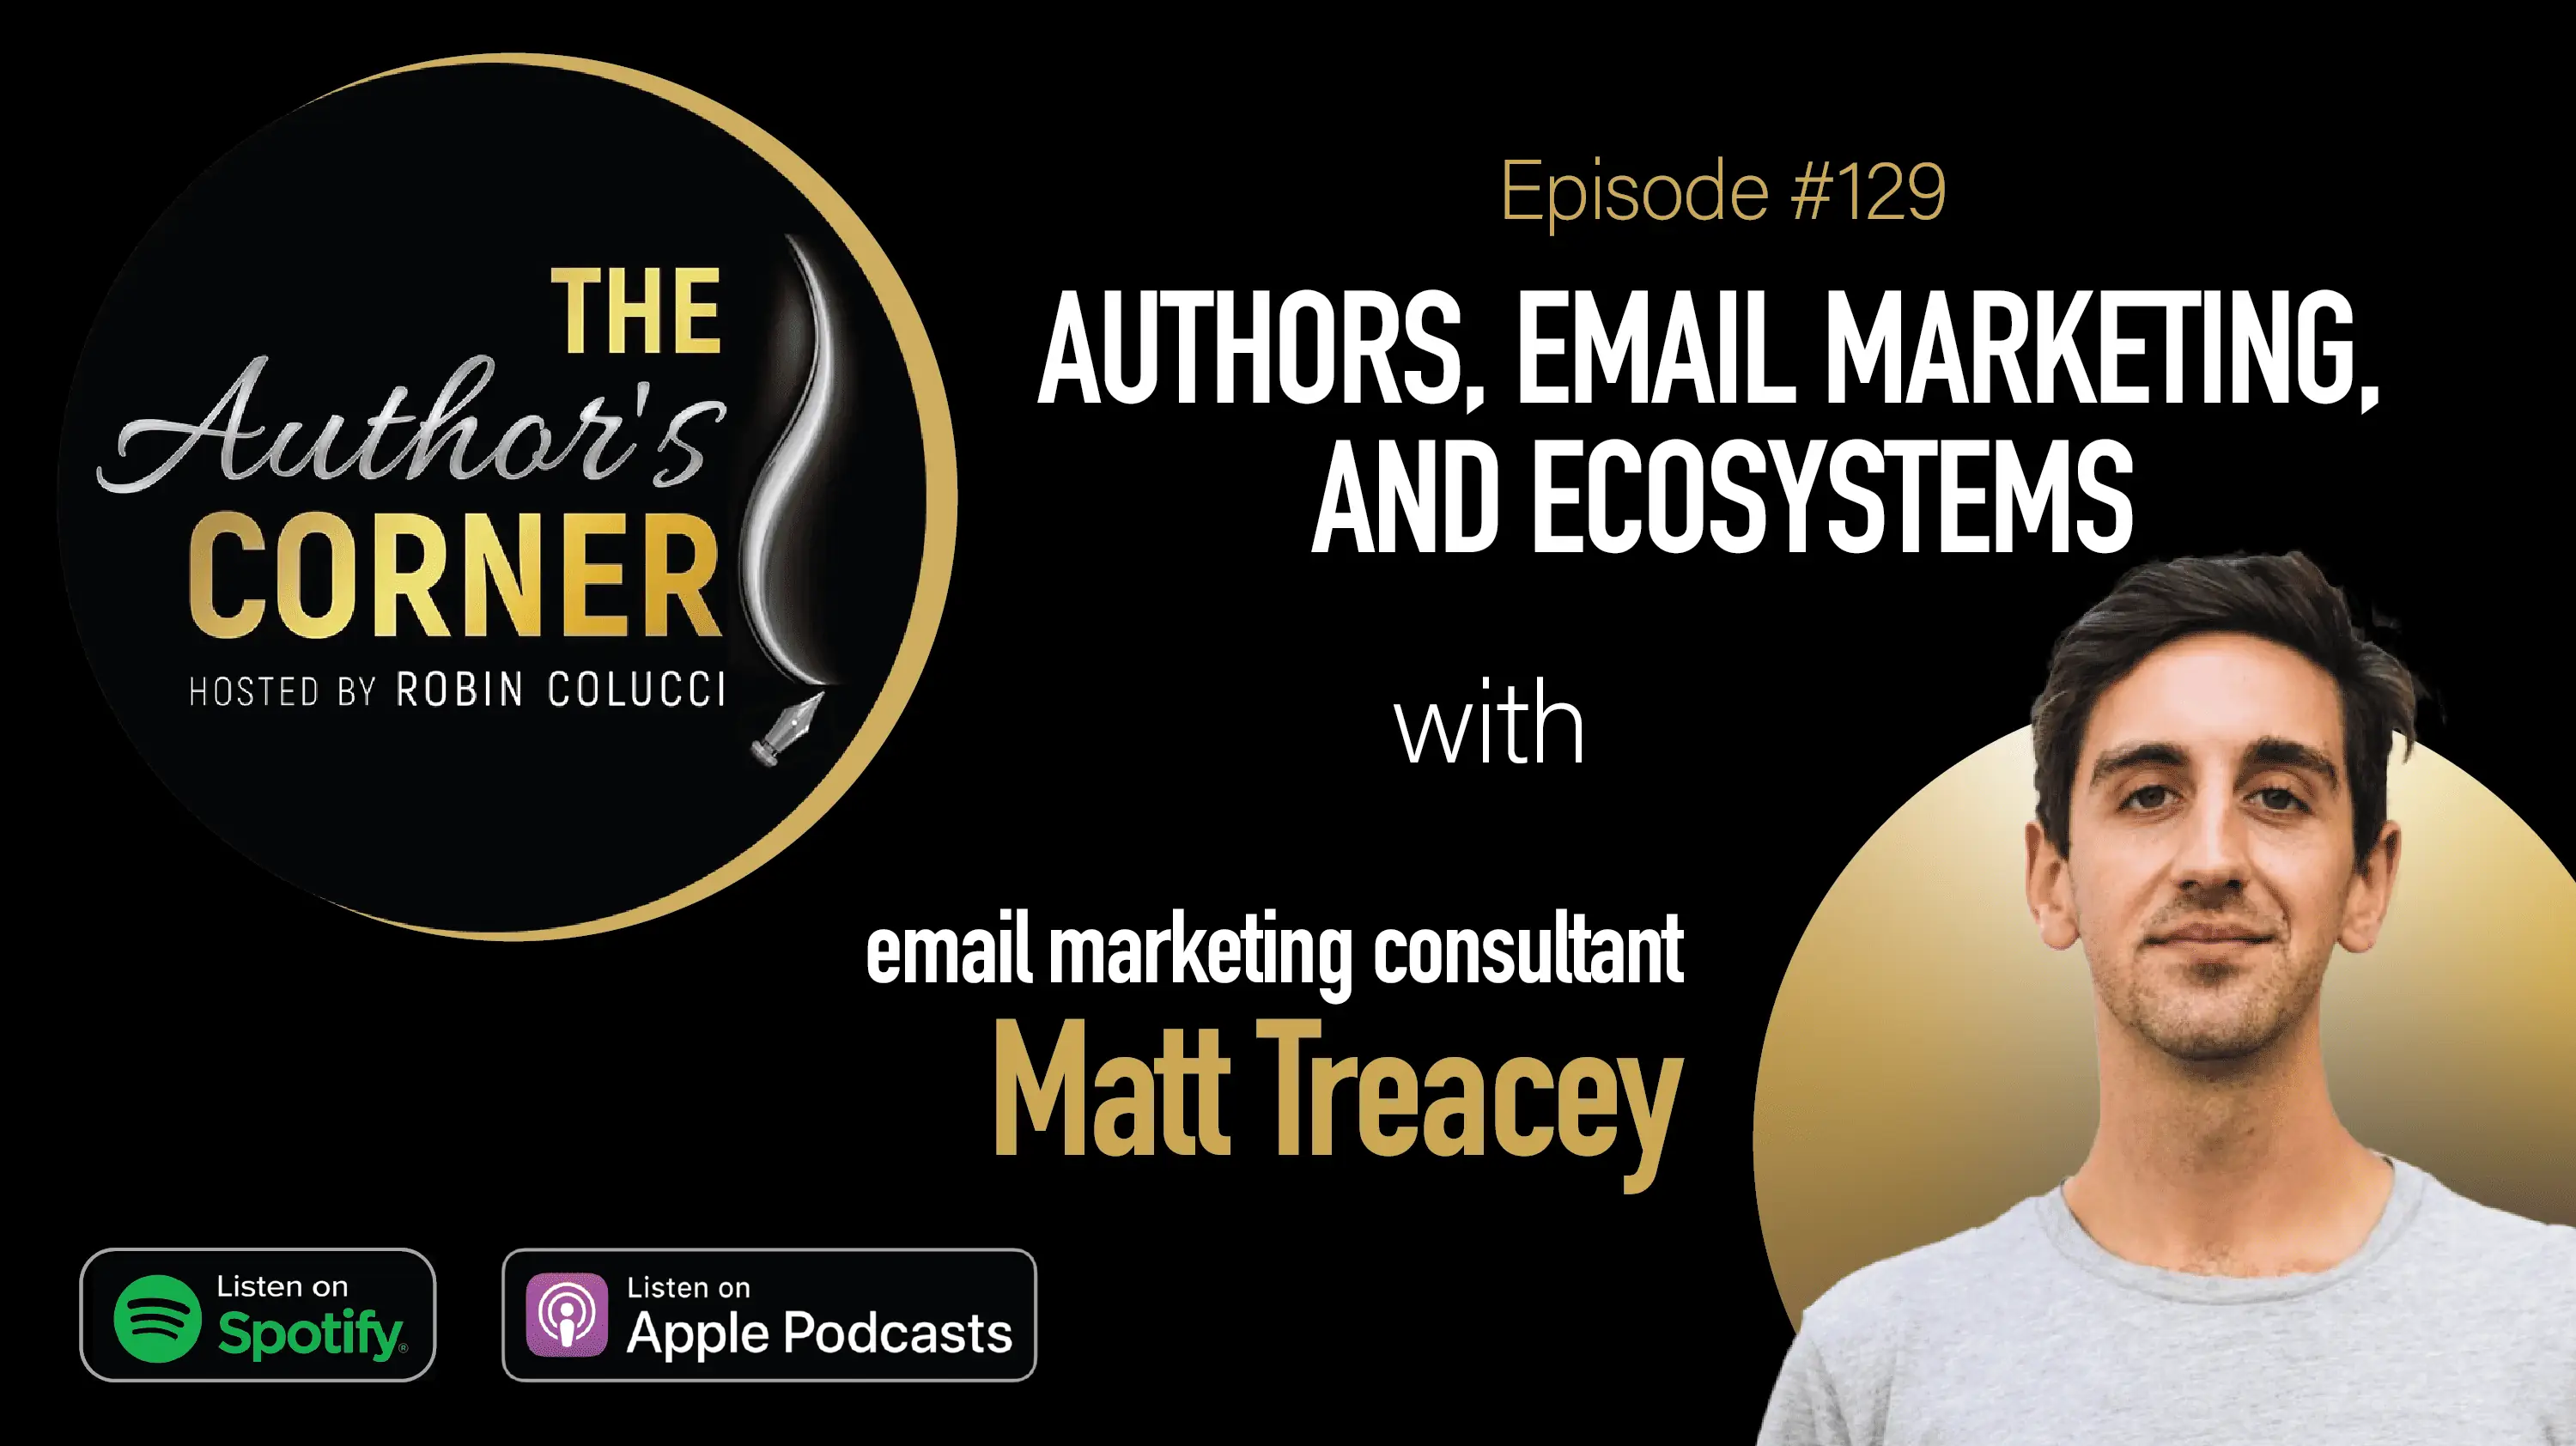 Matt Treacey Email Marketing